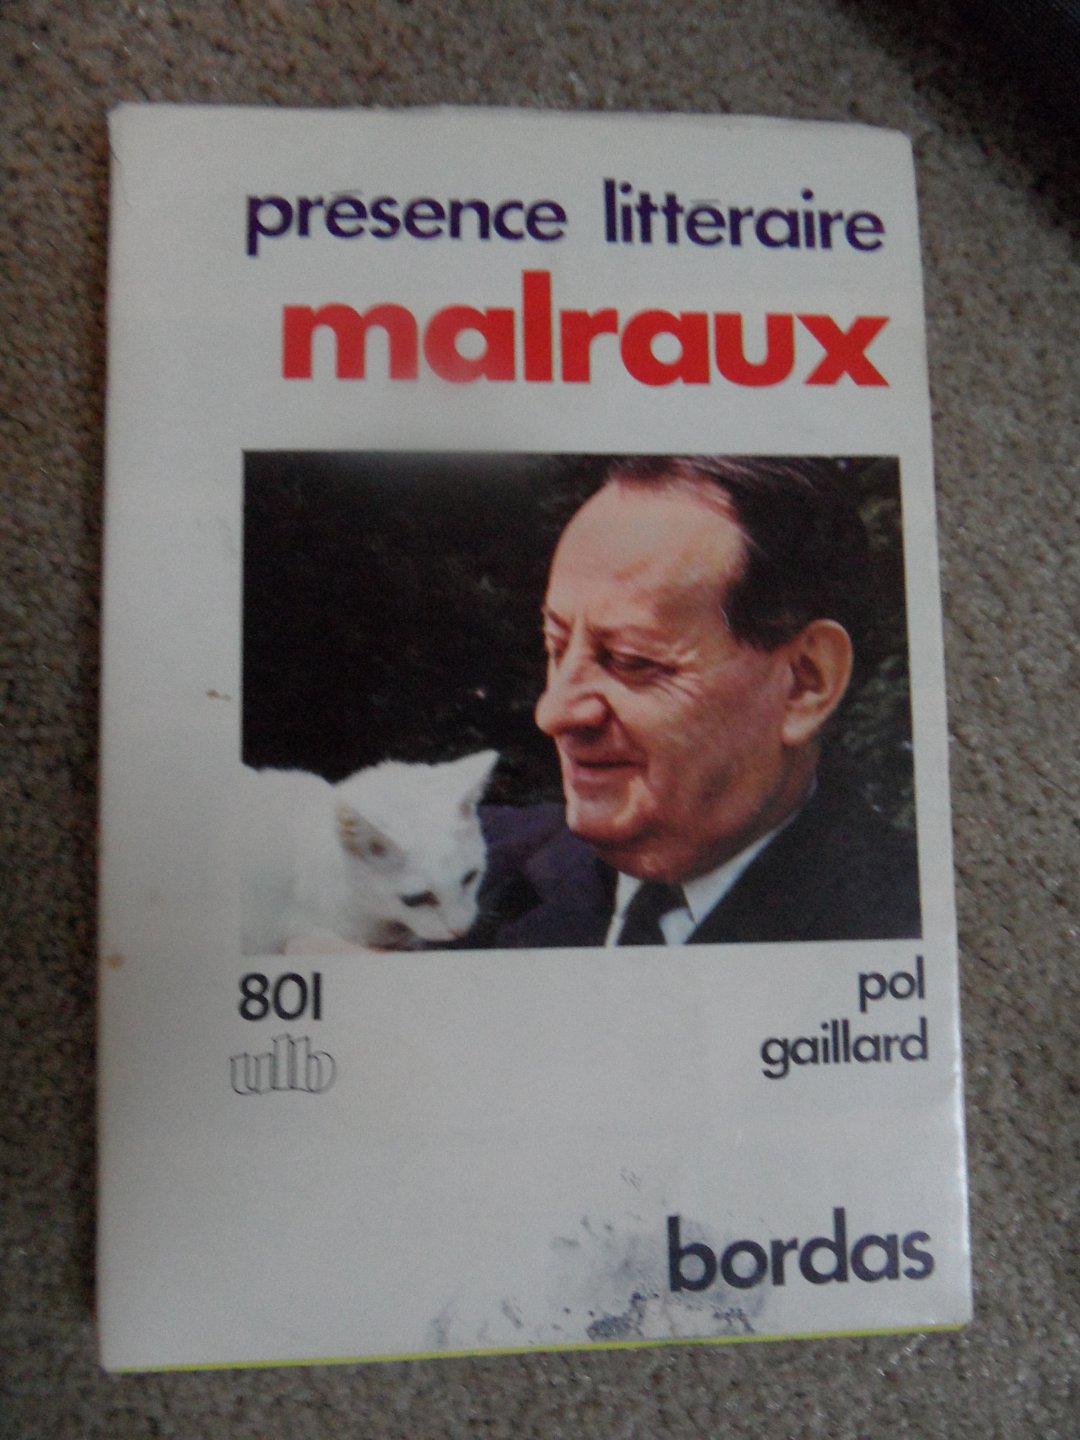 Gaillard, Pol - Malraux